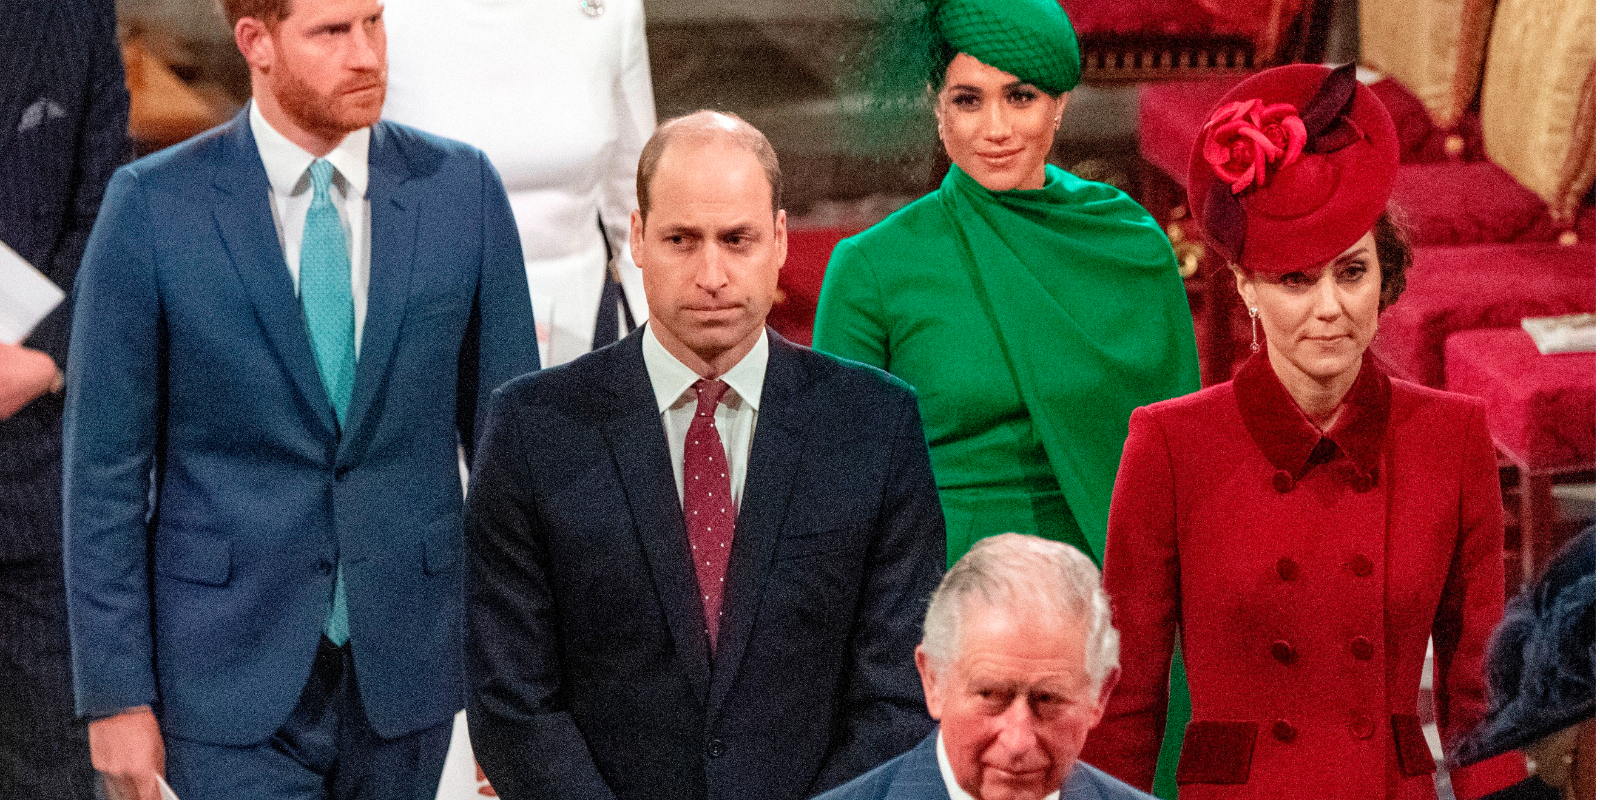 Prince Harry, Meghan Markle, Prince William, Kate Middleton, and King Charles III.